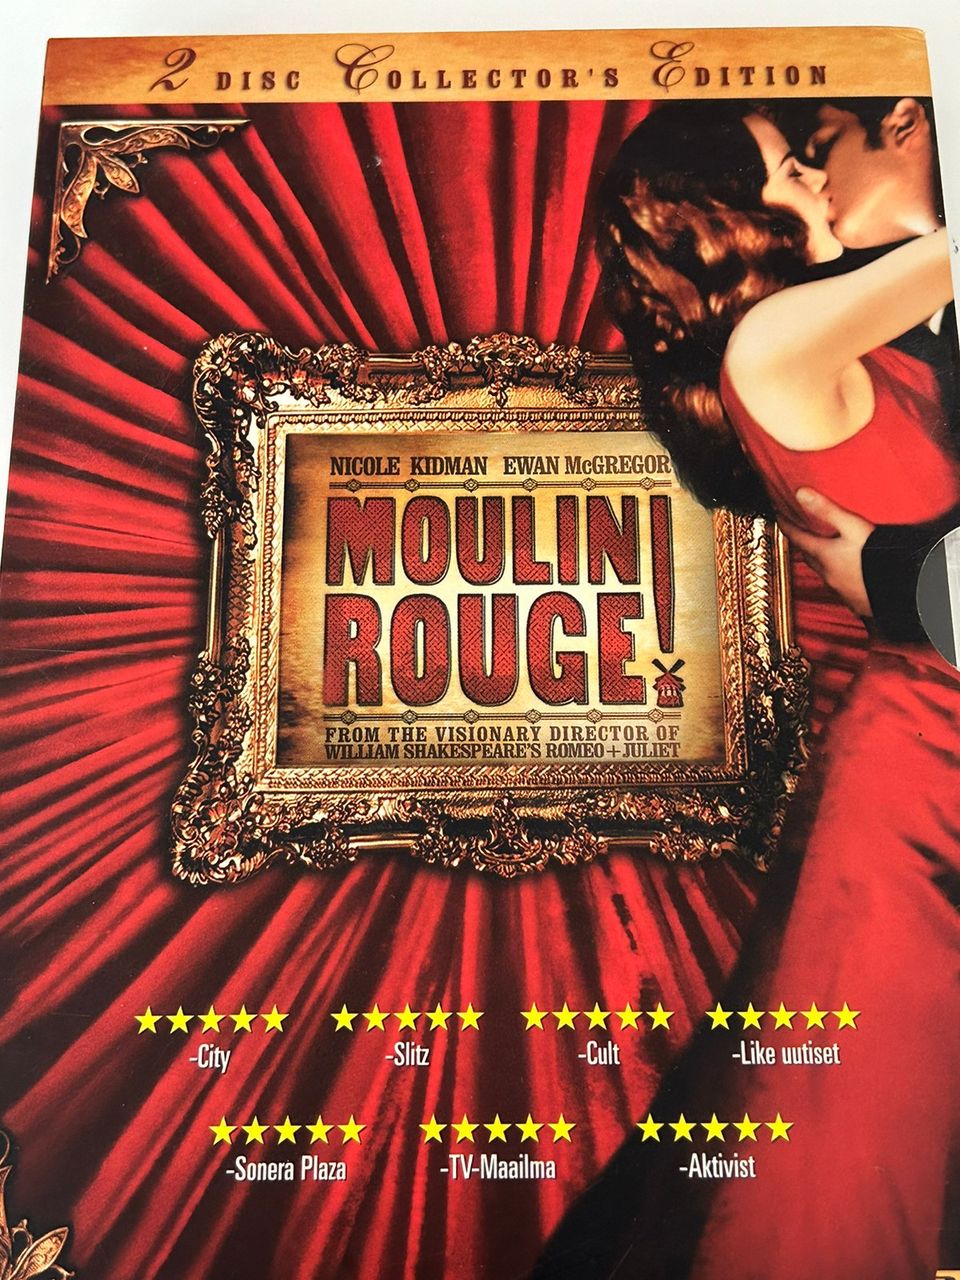 Moulin rouge dvd